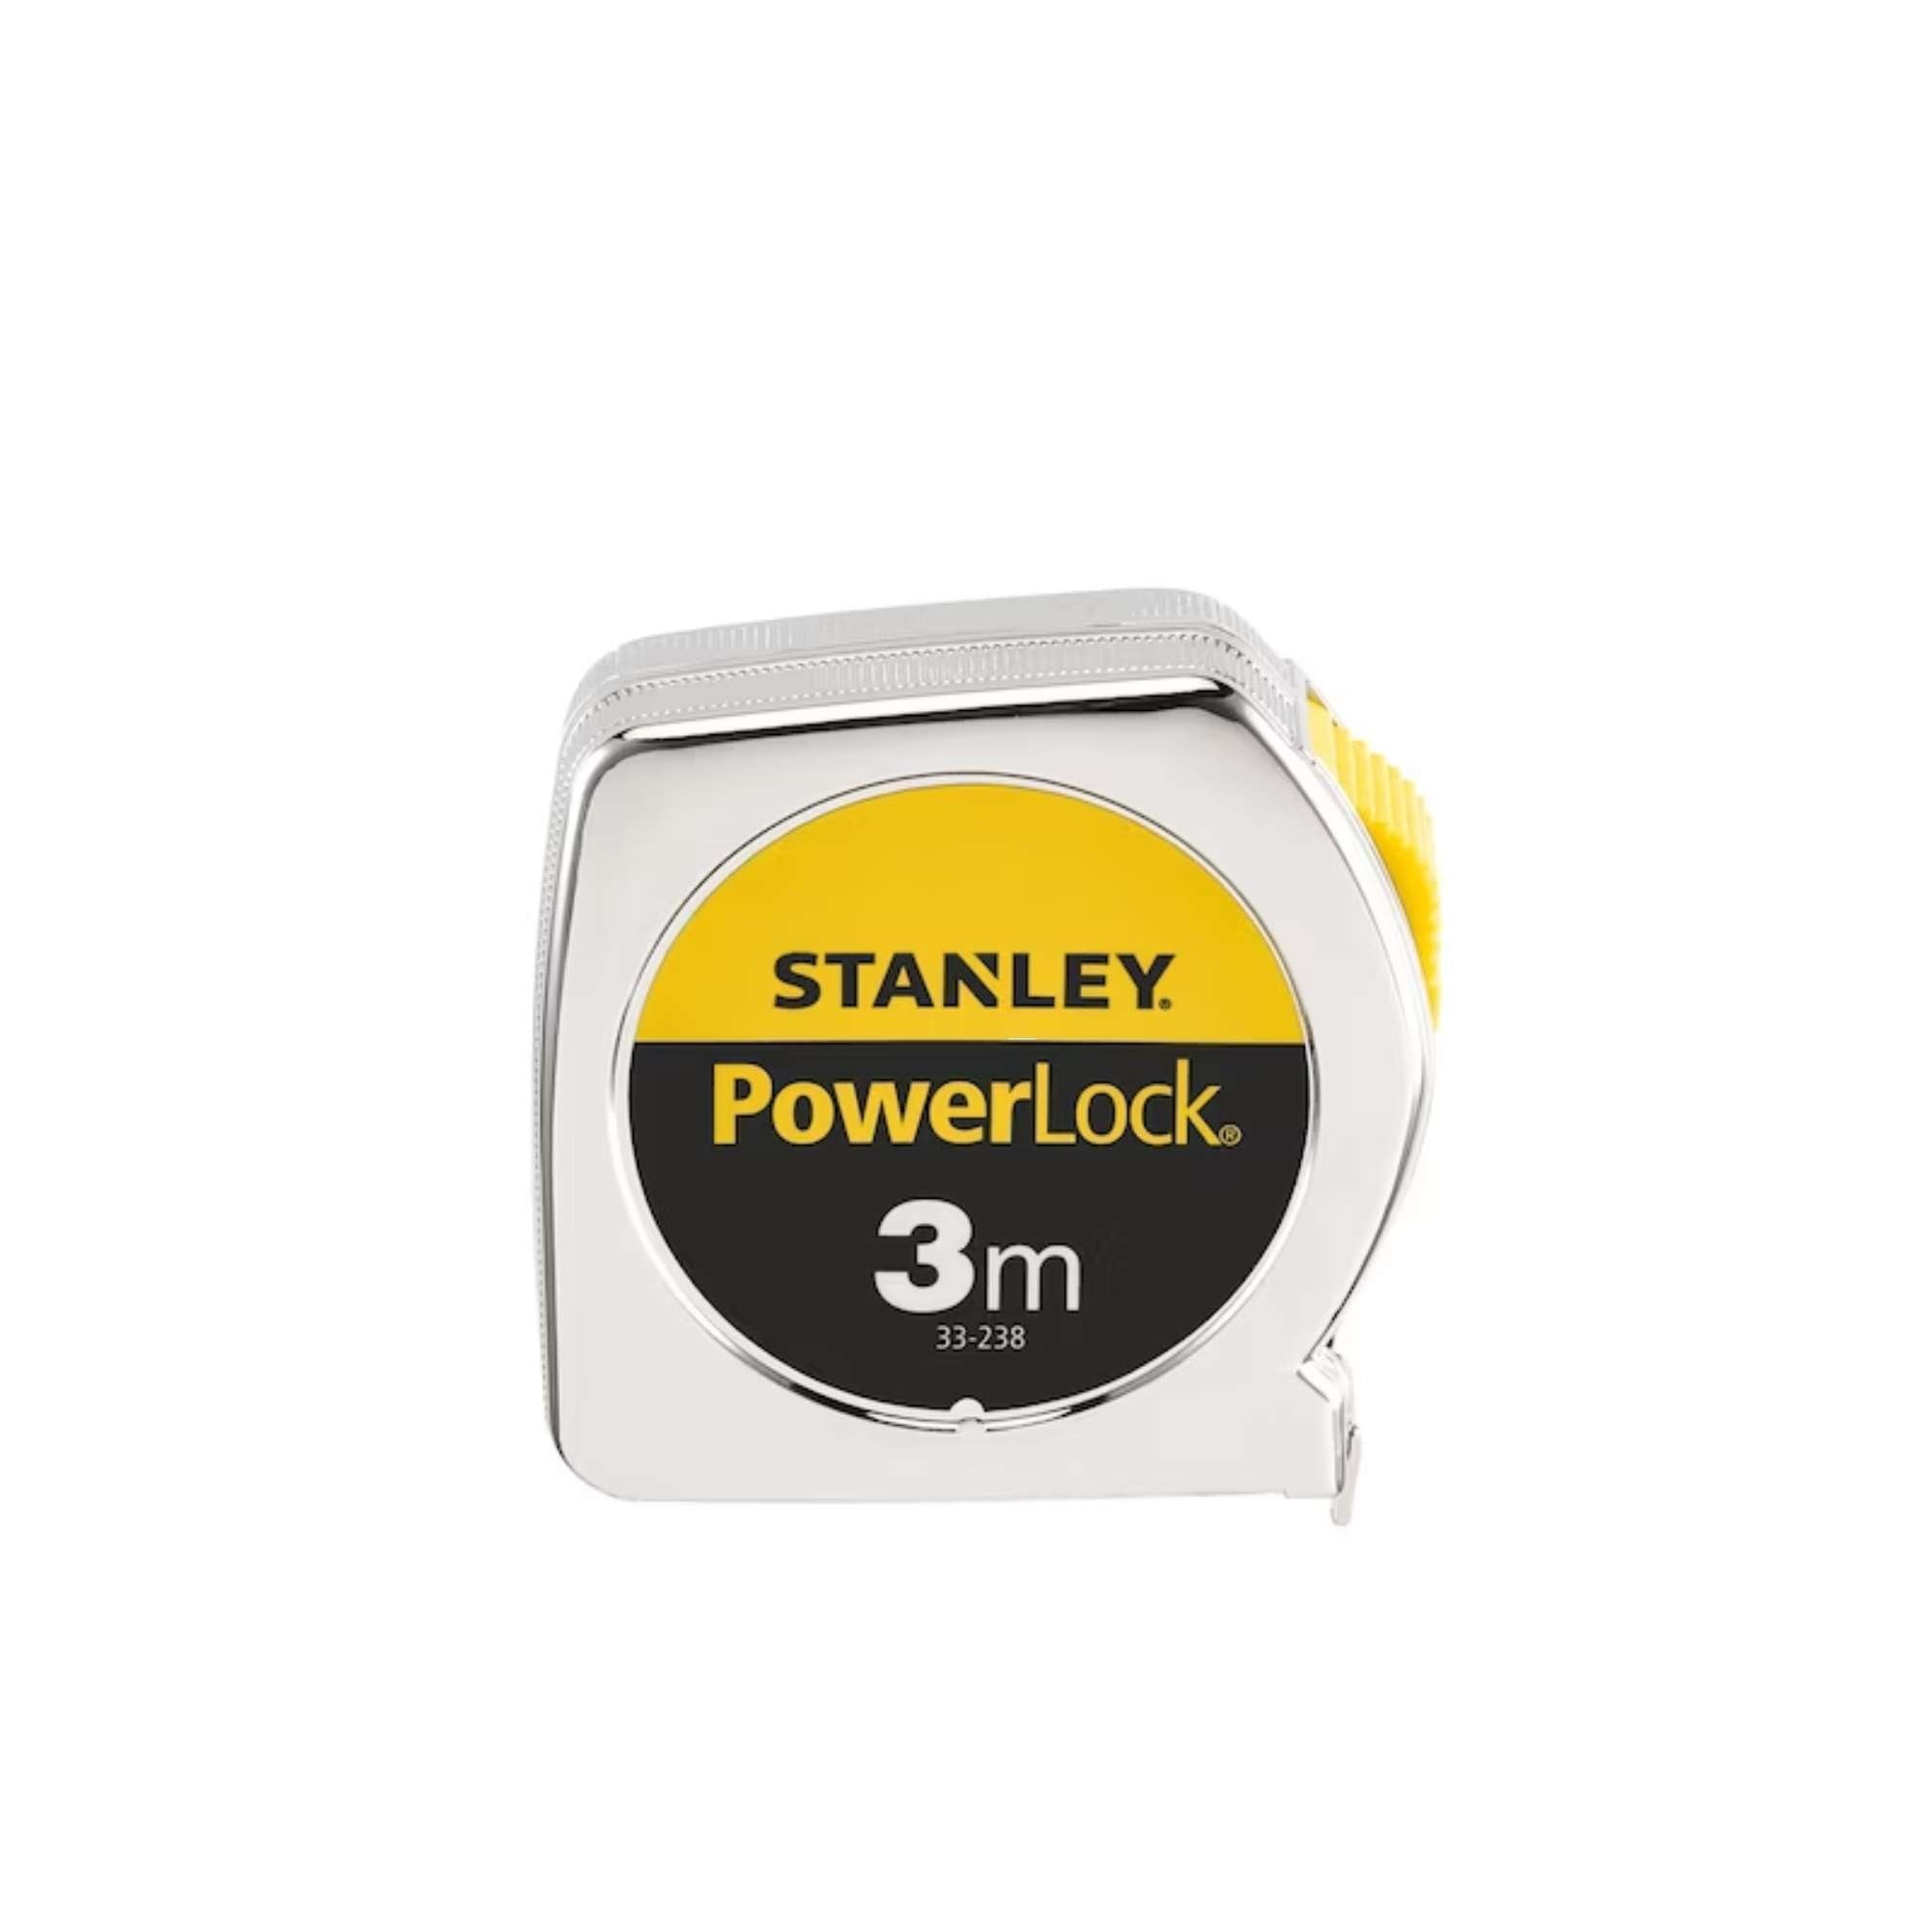 3M Powerlock 3M plastic case - Stanley 0-33-238